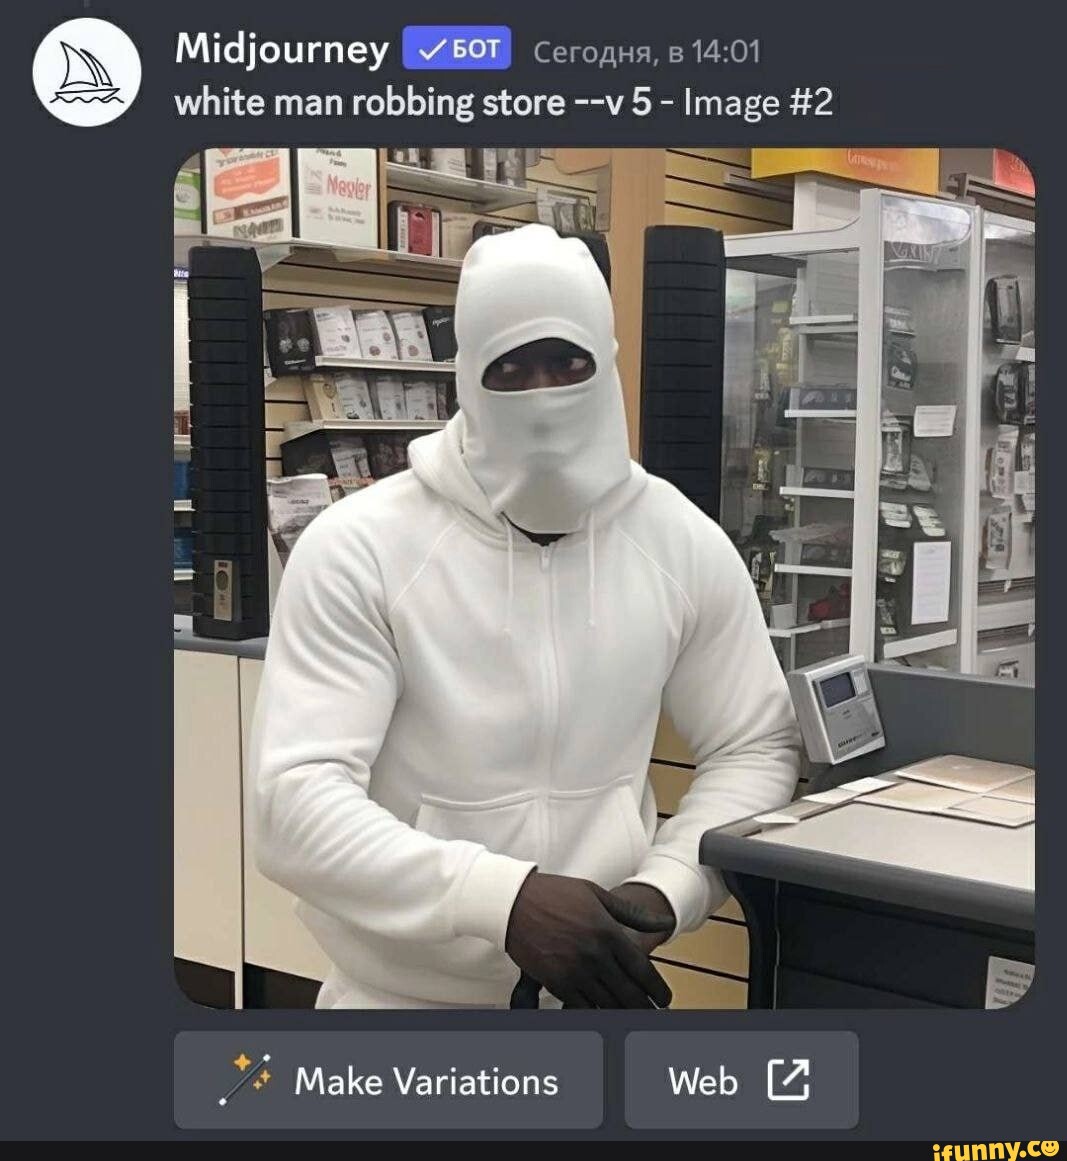 Midjourney I Cerogus White Man Robbing Store V Image Make Variations Web IFunny